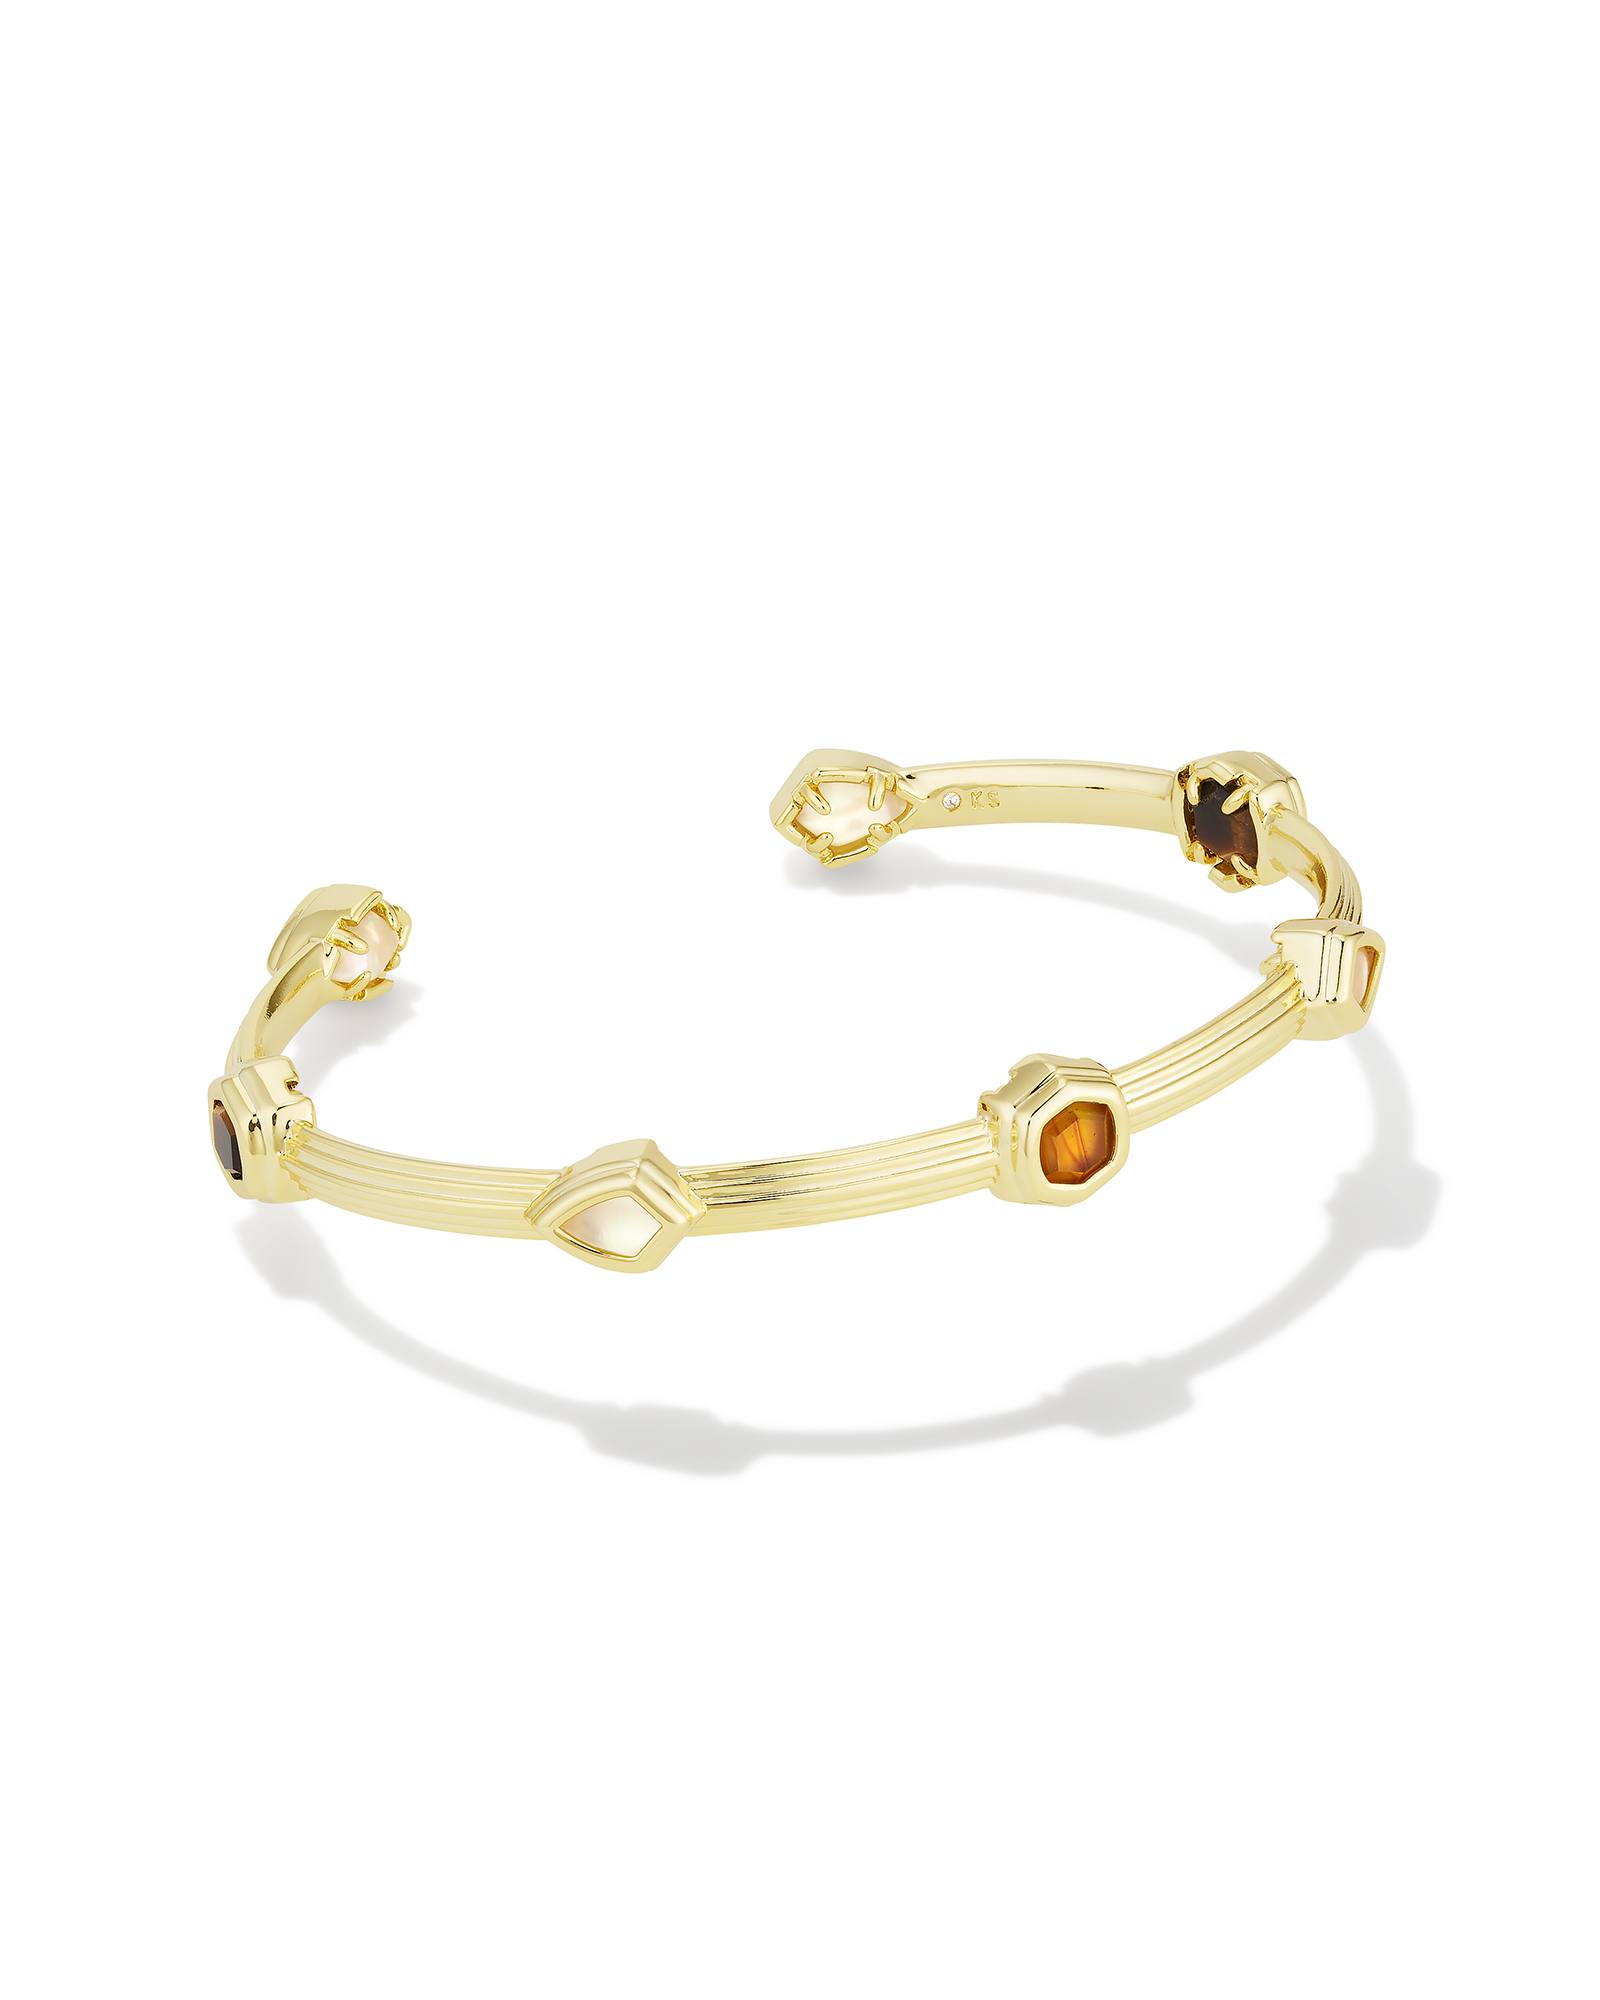 Elton Gold Cuff Bracelet in Iridescent Drusy